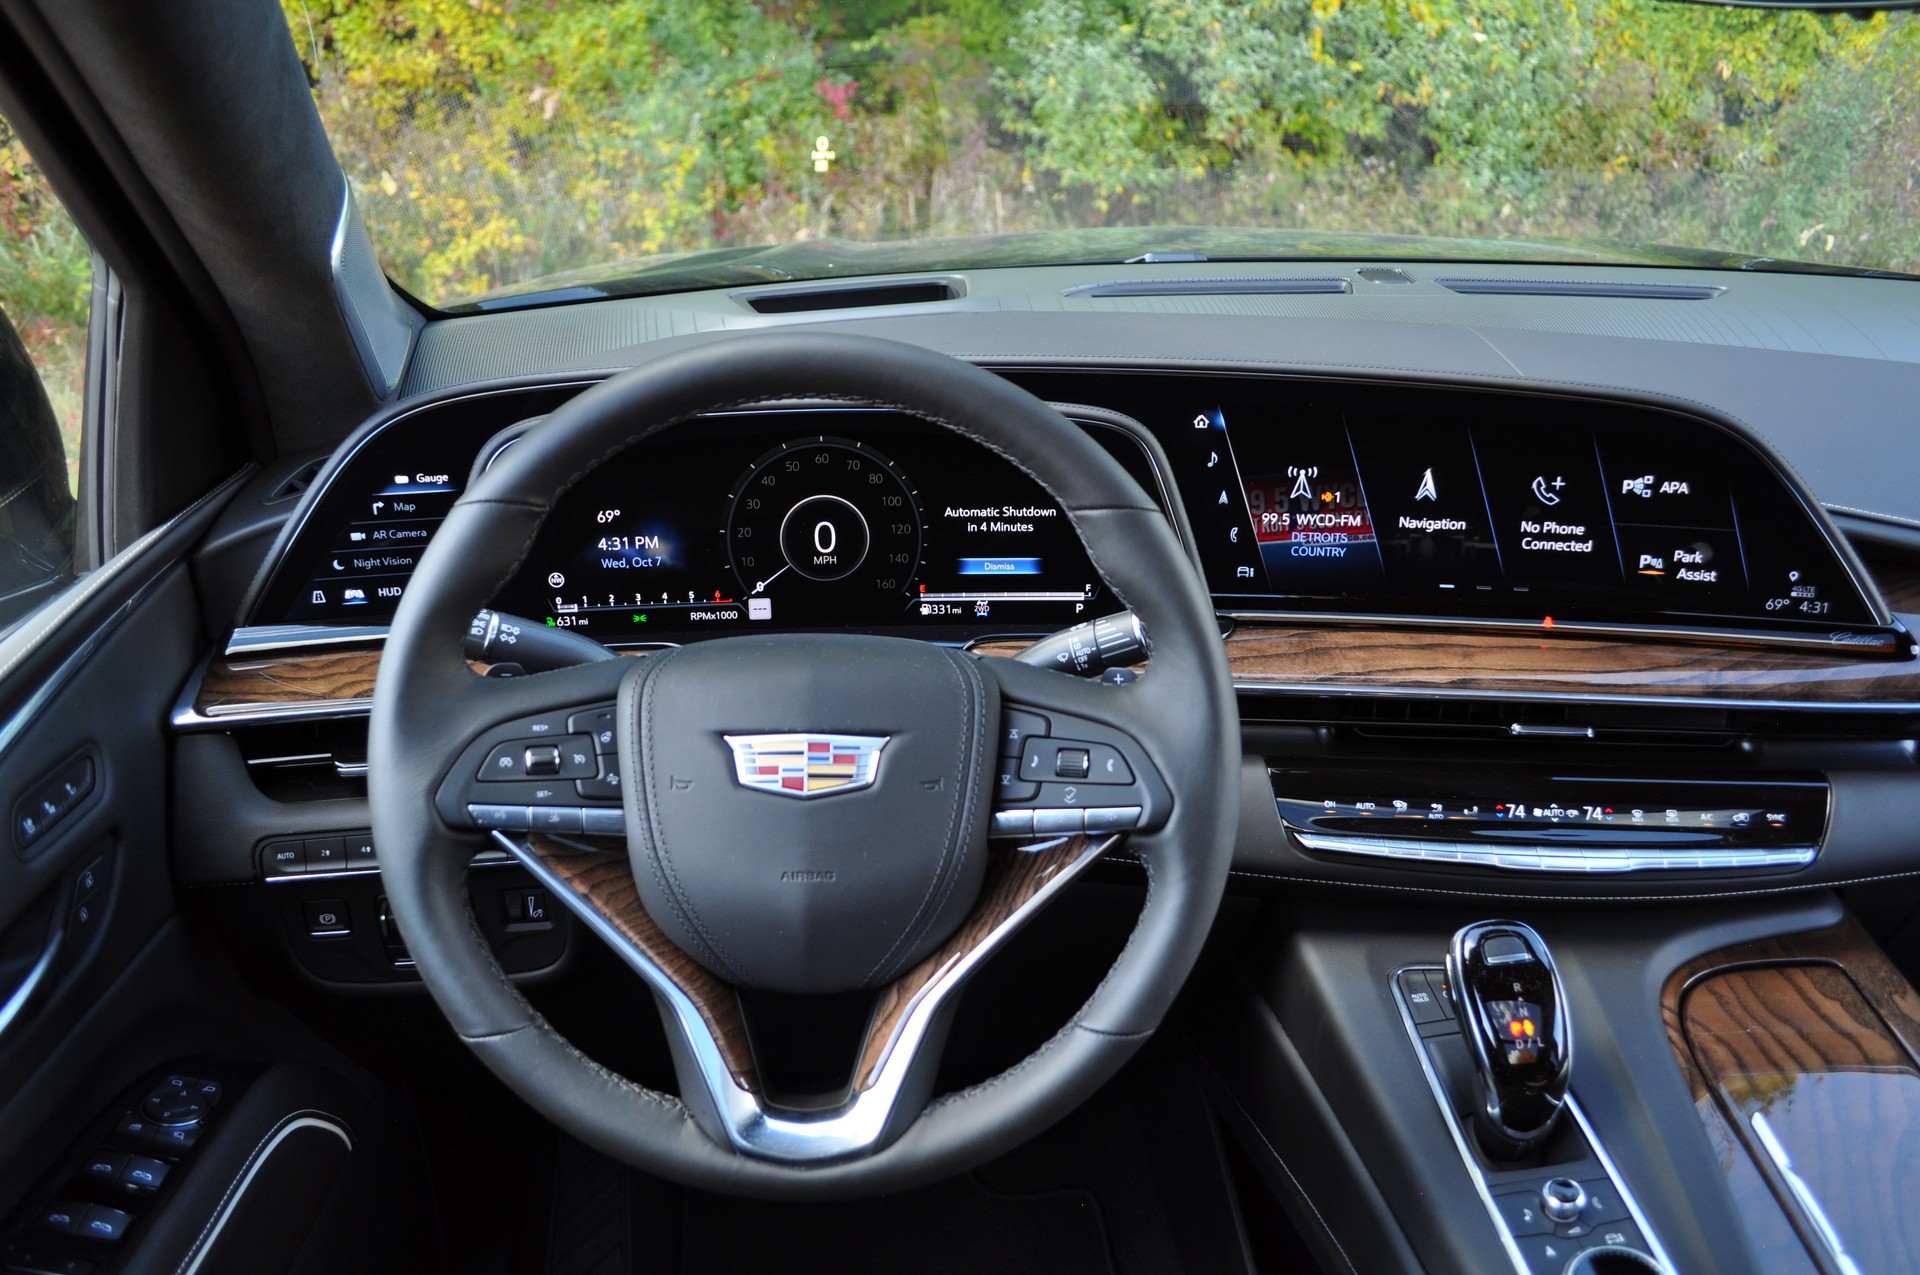 Driven: The 2021 Cadillac Escalade Finally Feels Like A Proper Flagship